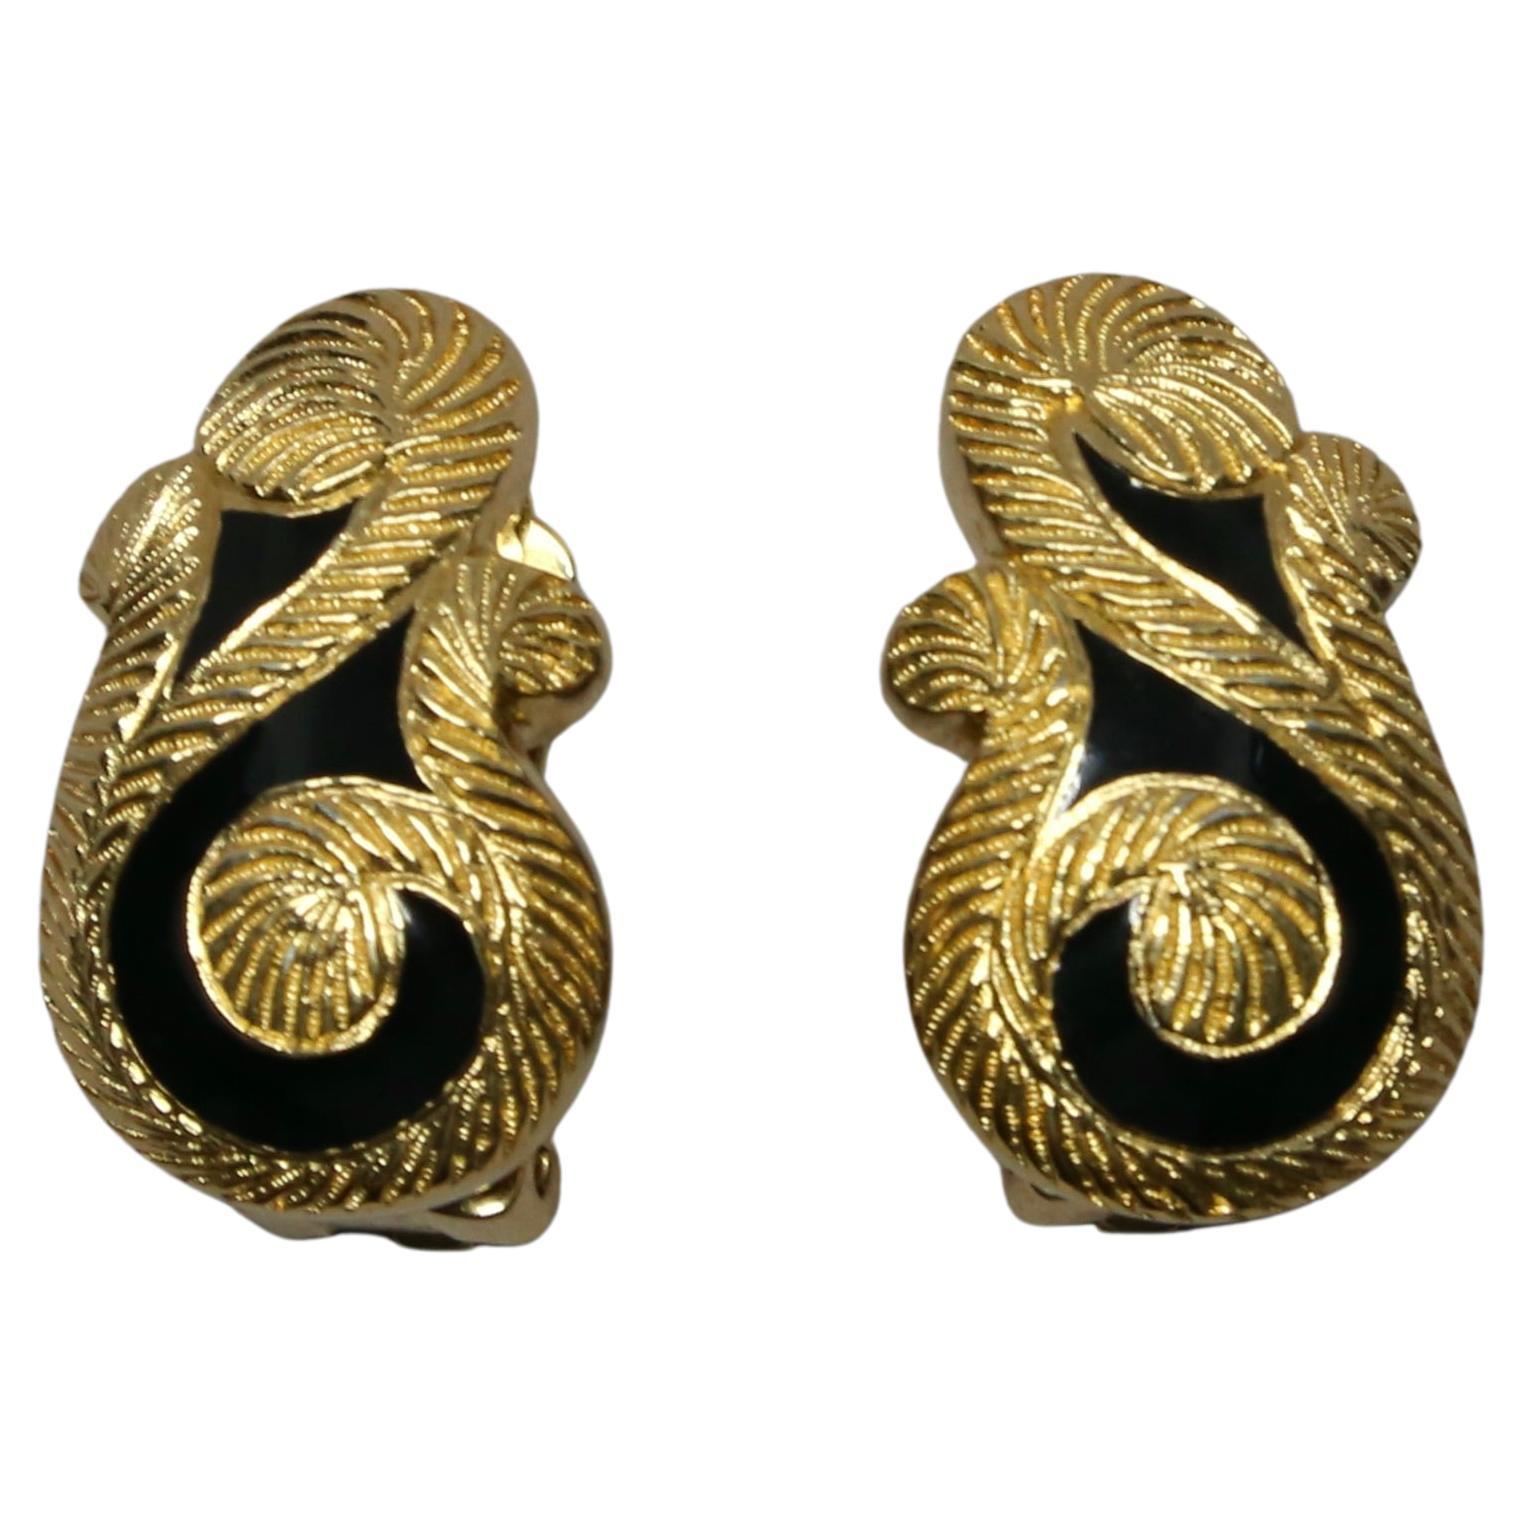 1980's CHRISTIAN DIOR gilt earrings with enamel